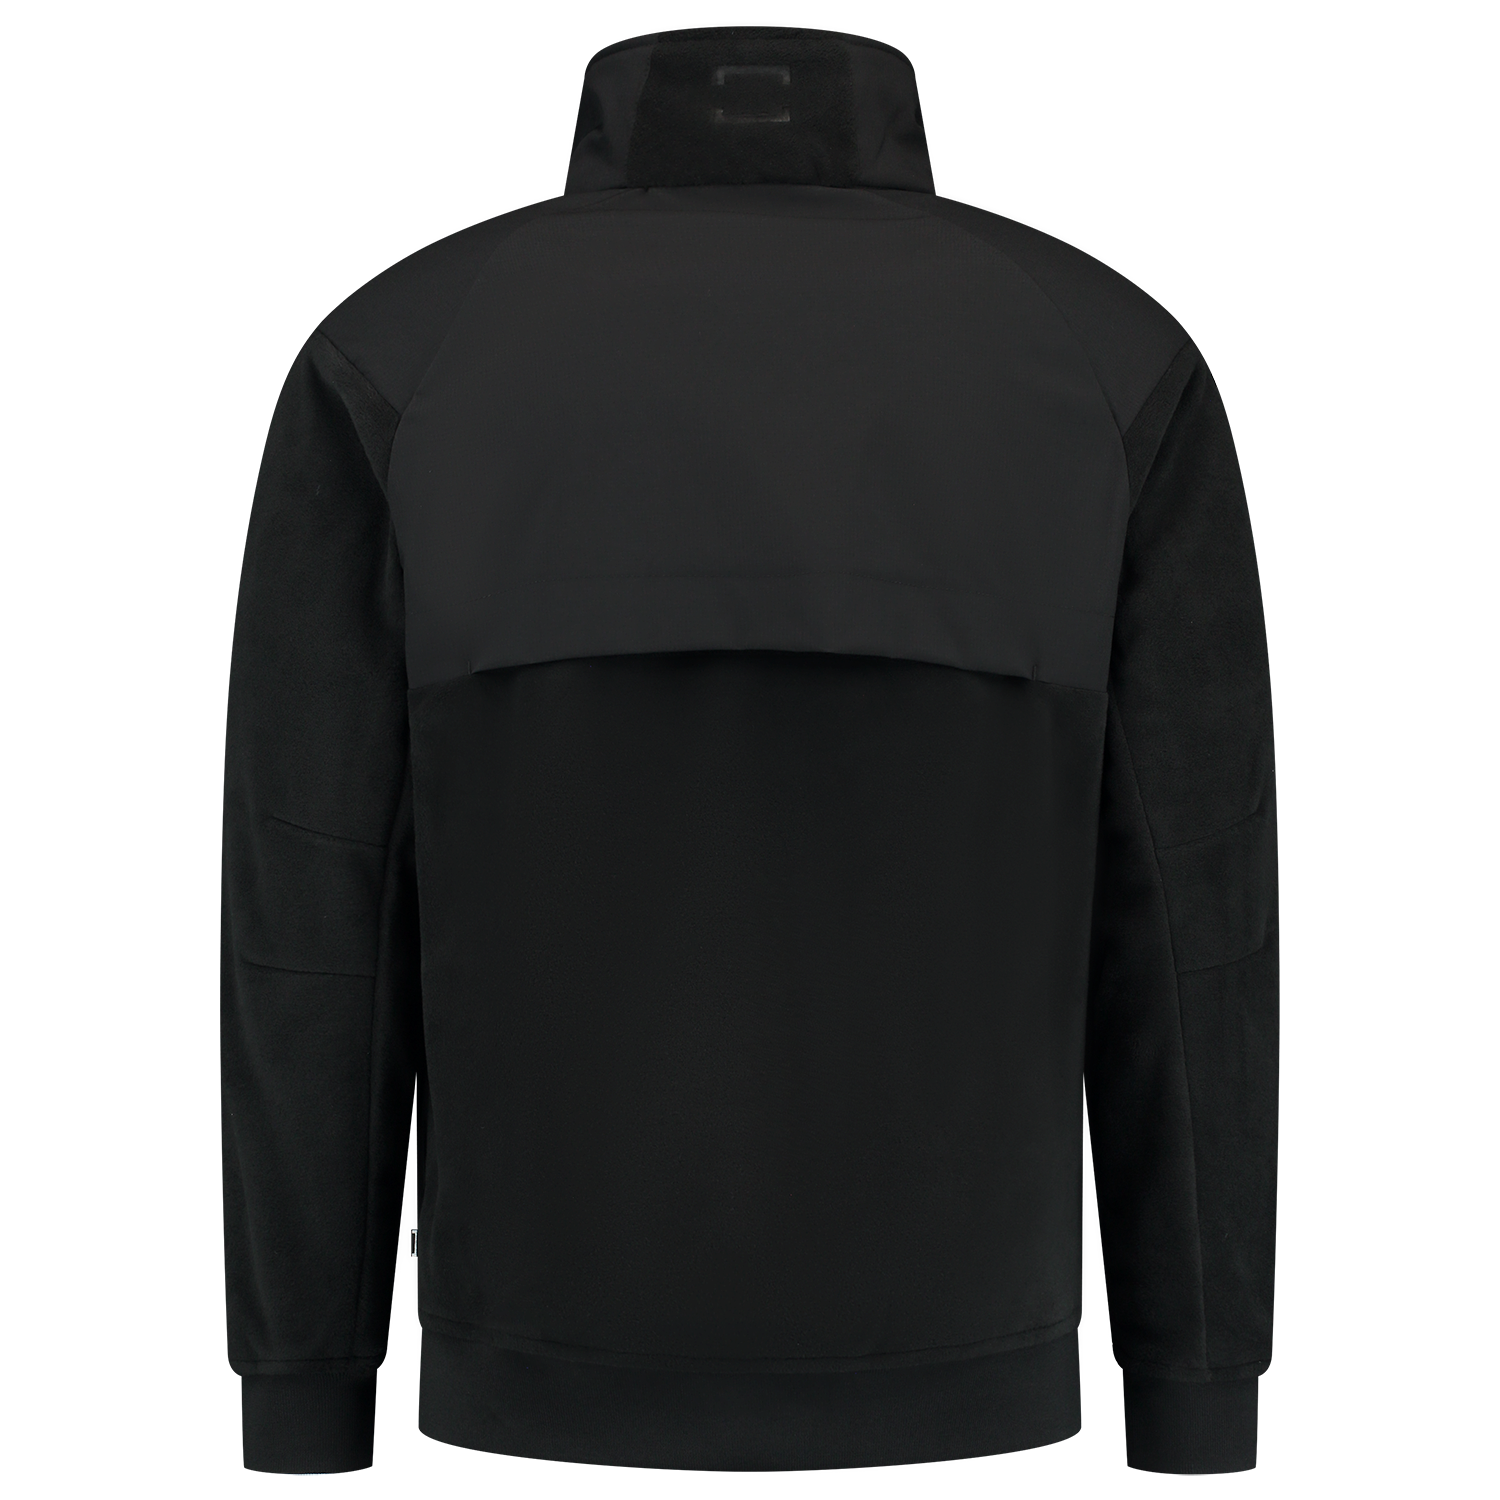 Anorak jacket RE 2050